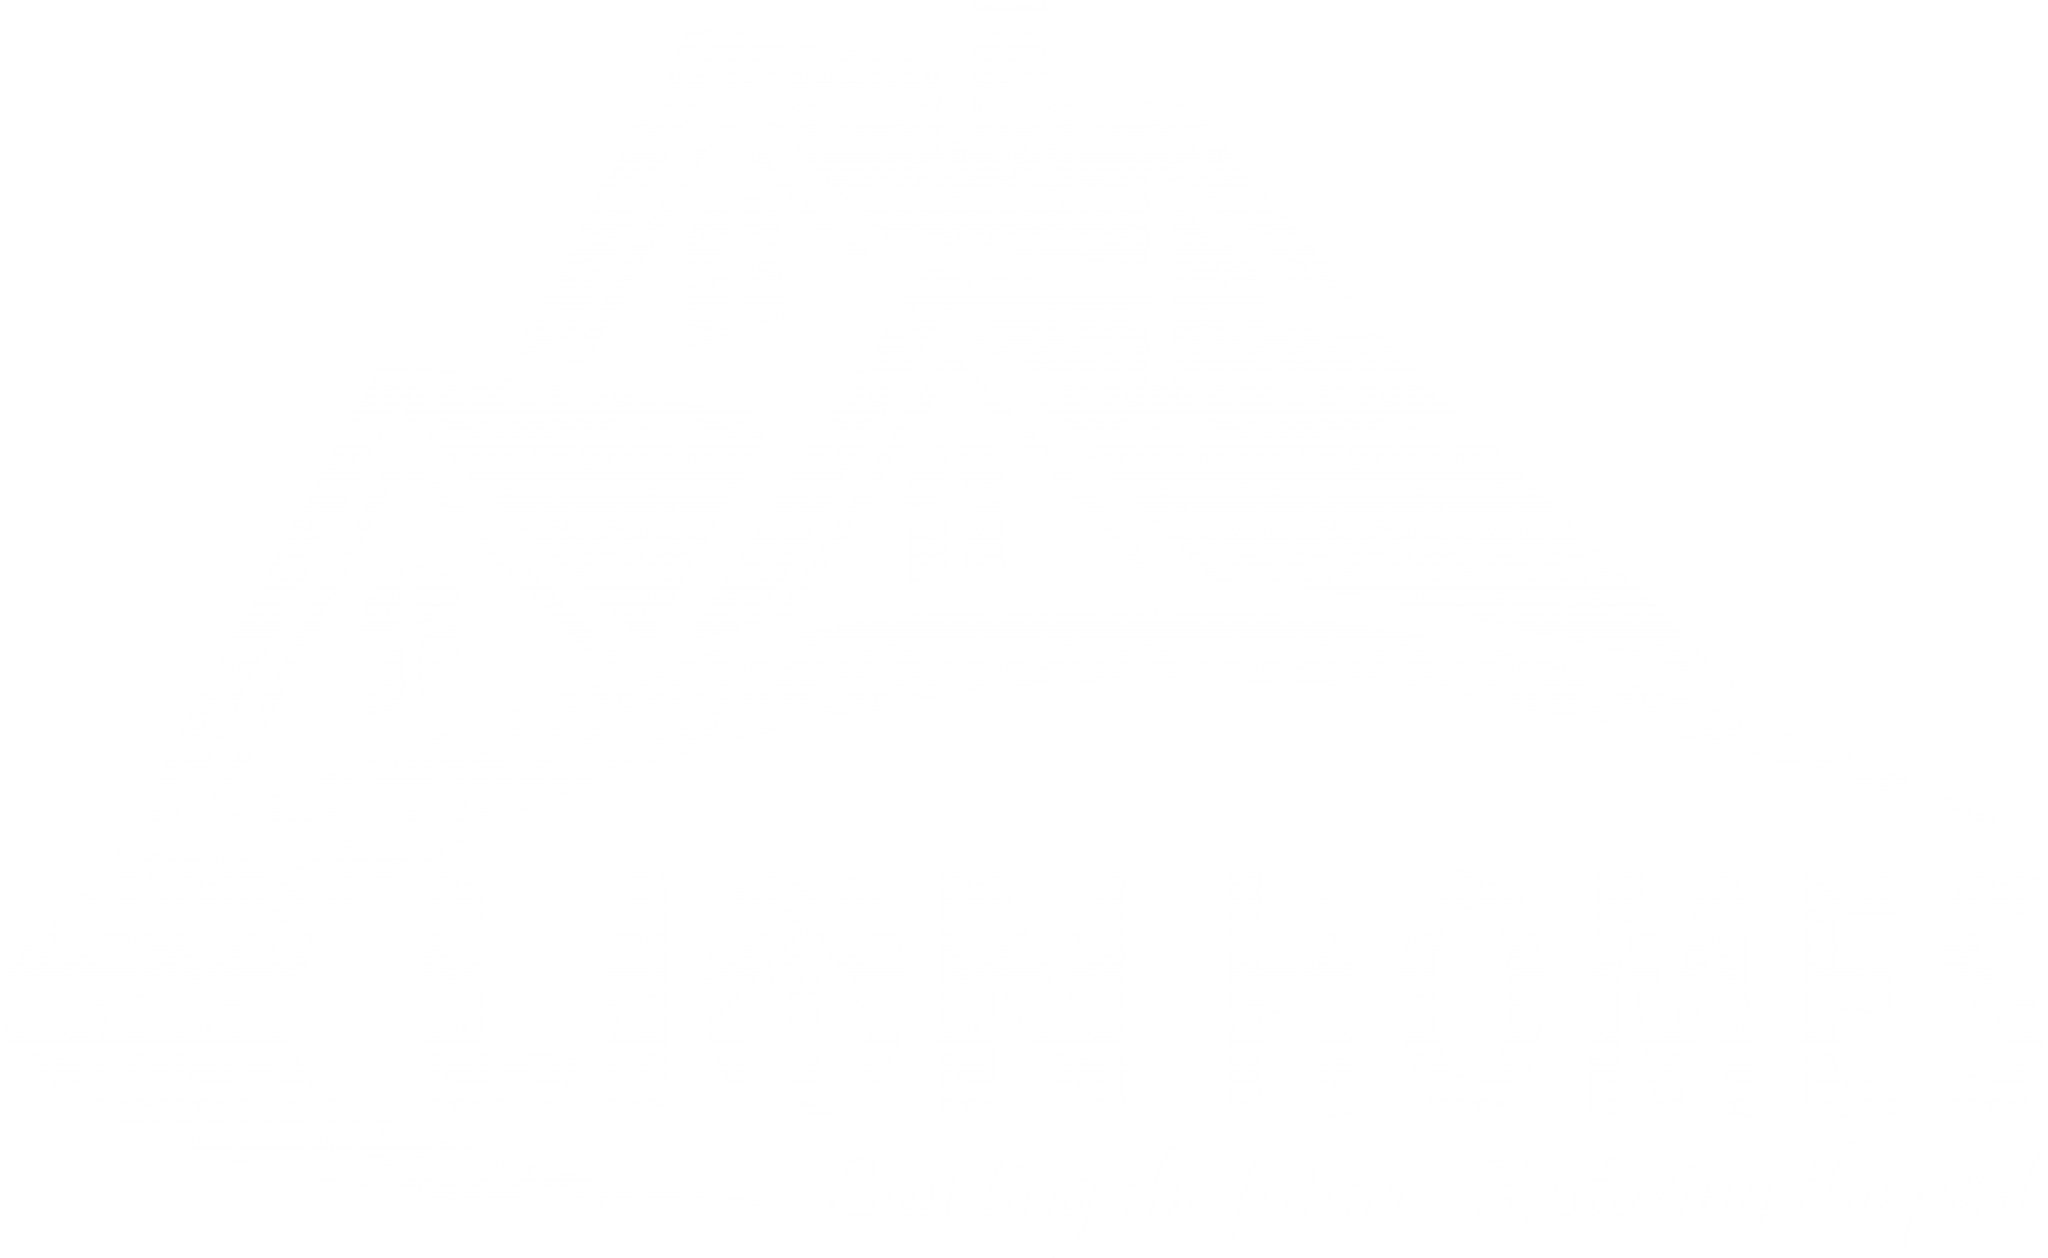 Lion Homes